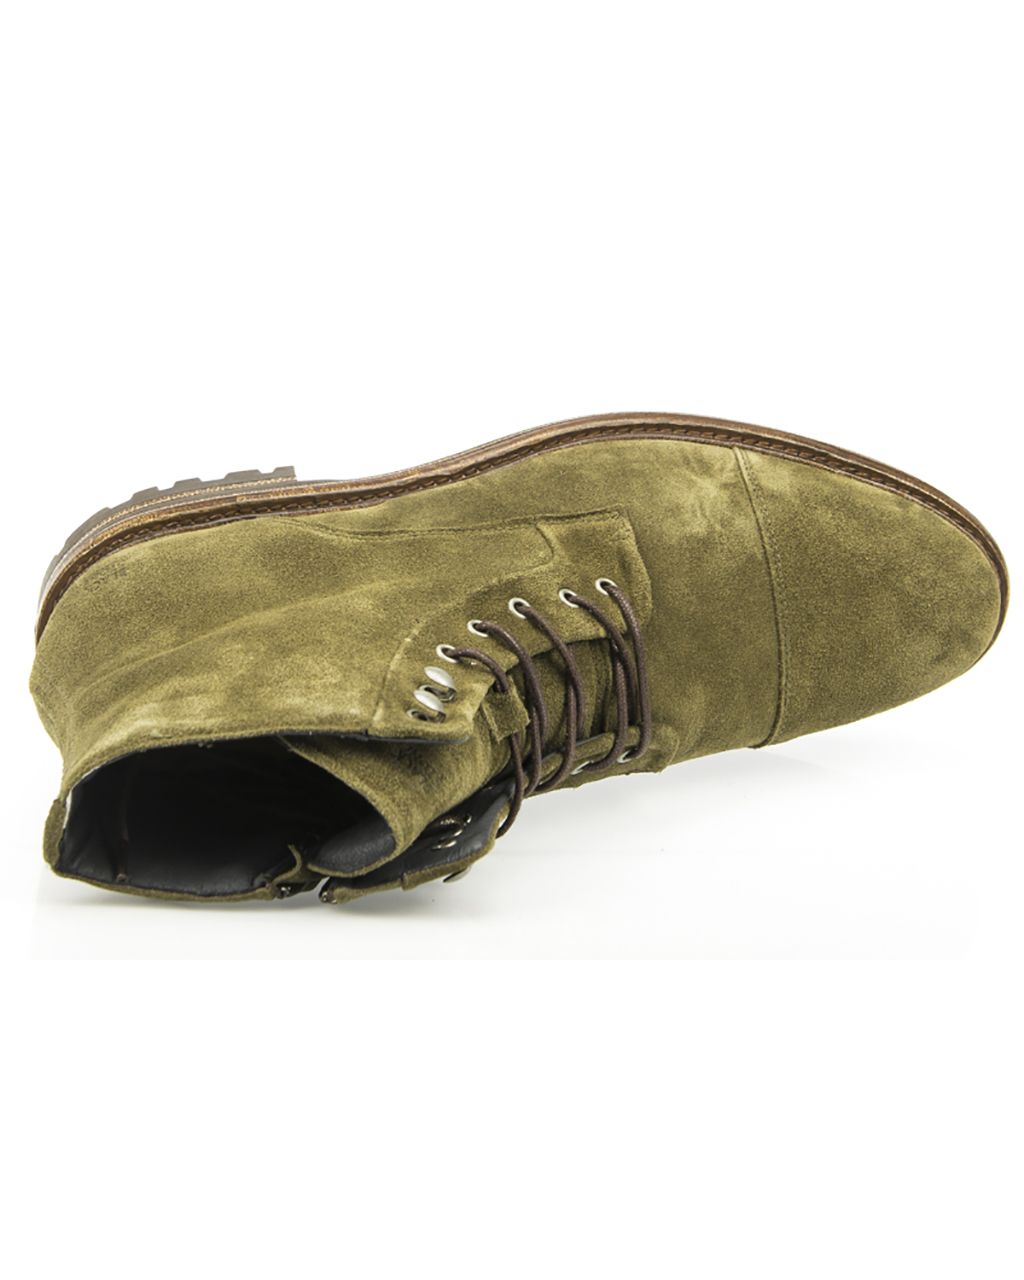 Blackstone Casual Boots Donker groen 073264-001-41